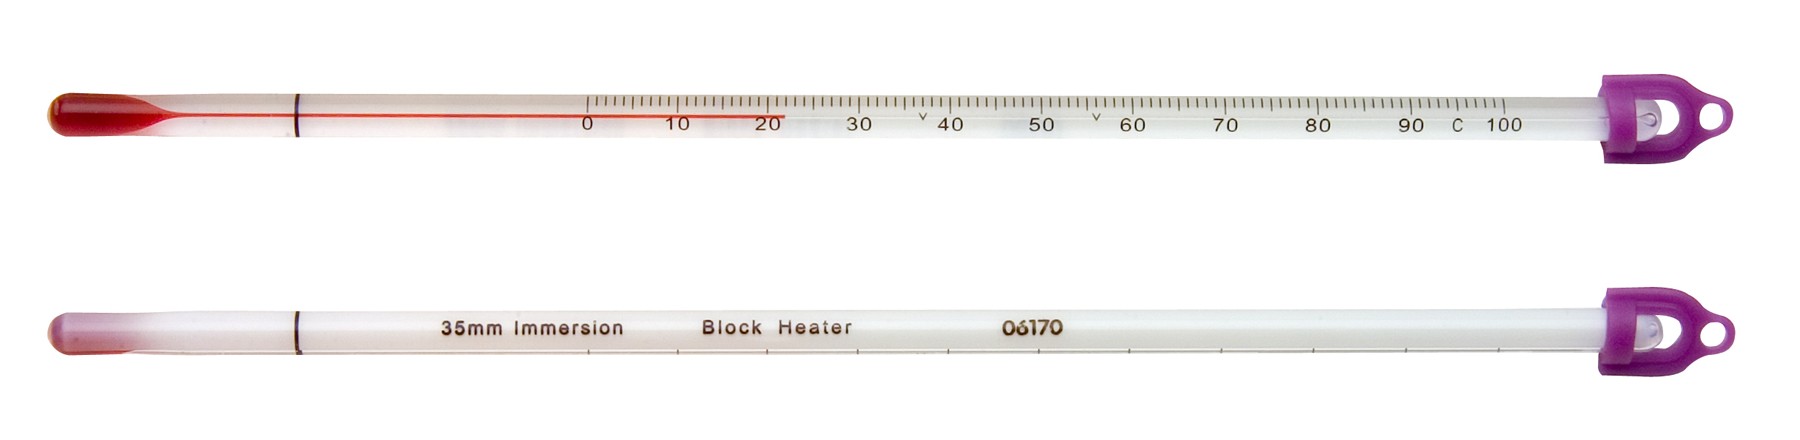 SP Bel-Art, H-B DURAC Dry Block/Incubator Liquid-In-Glass Thermometer; 24 to 56C, 76mm Immersion, Organic Liquid Fill